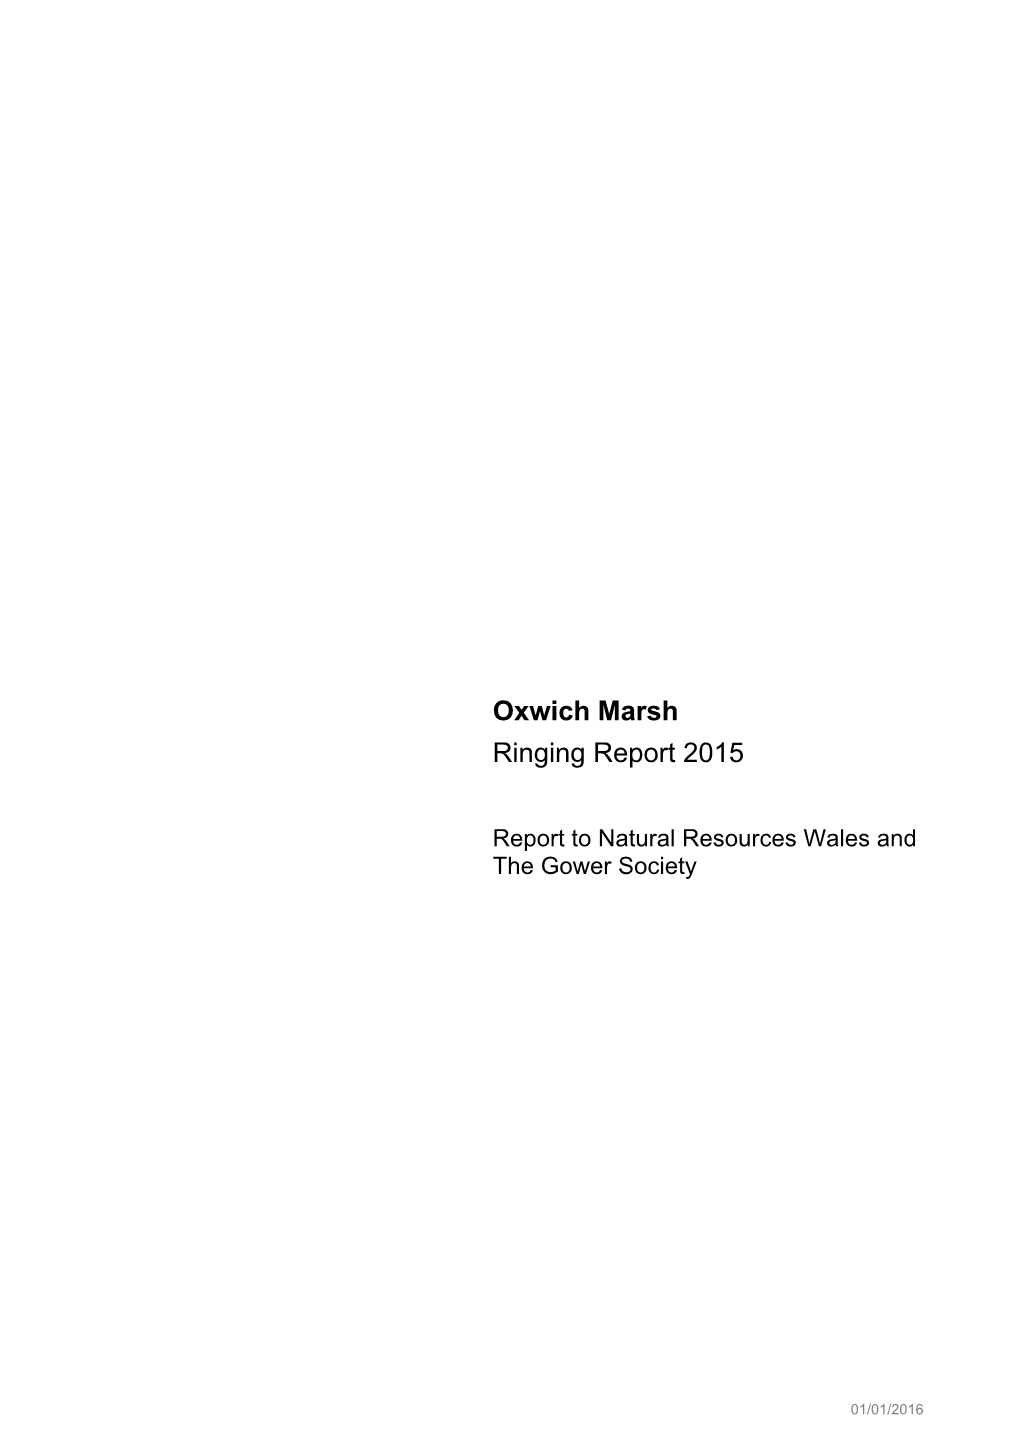 Oxwich Marsh Ringing Report 2015